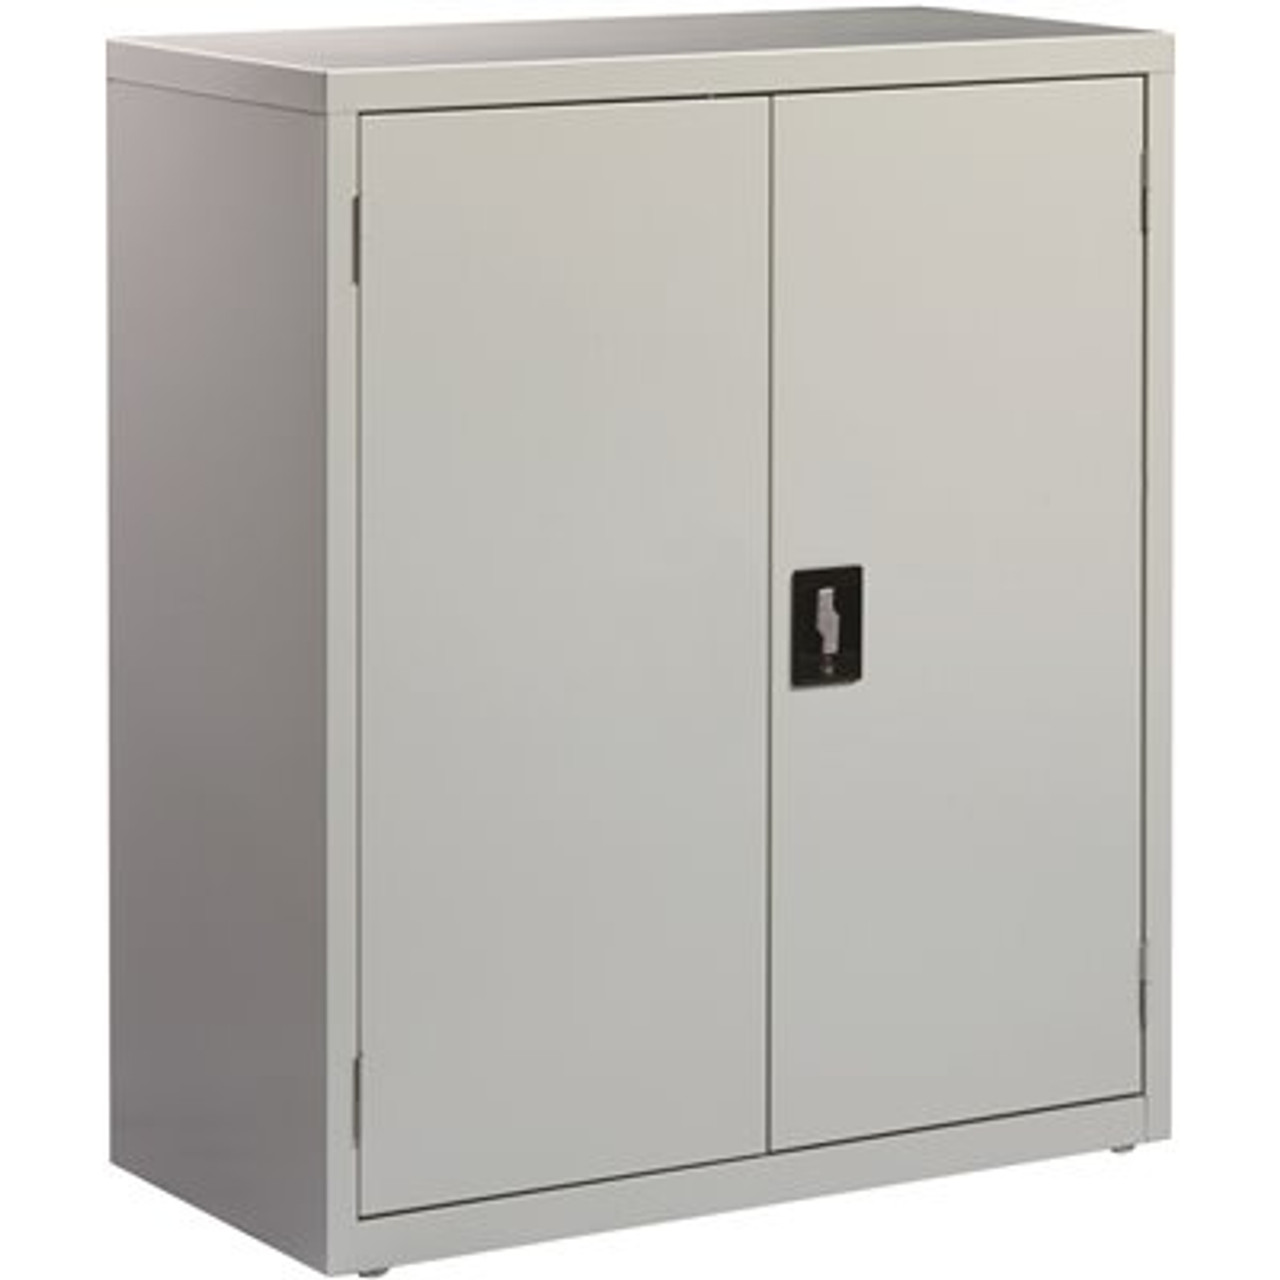 Hirsh 36 In. W X 42 In. H X 18 In. D 5-Shelves Steel Storage Cabinet In Light Gray